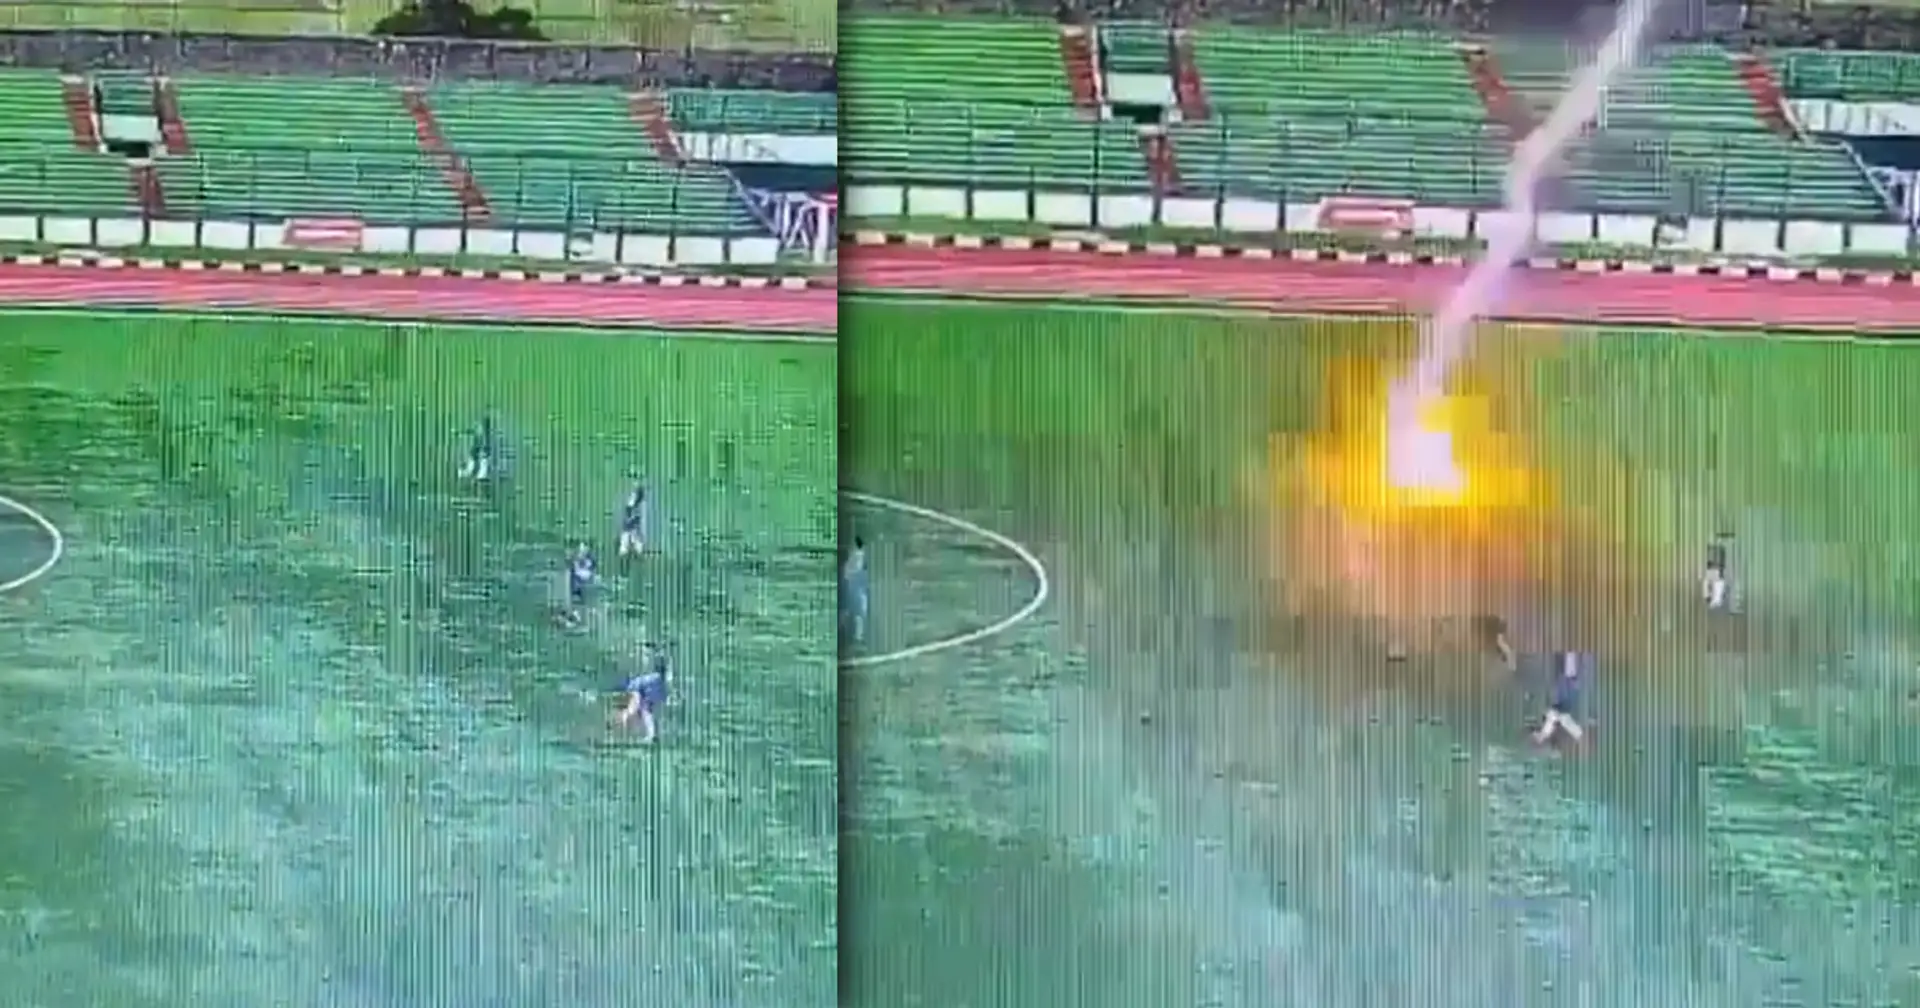 Lightning kills footballer in Indonesia on field during game